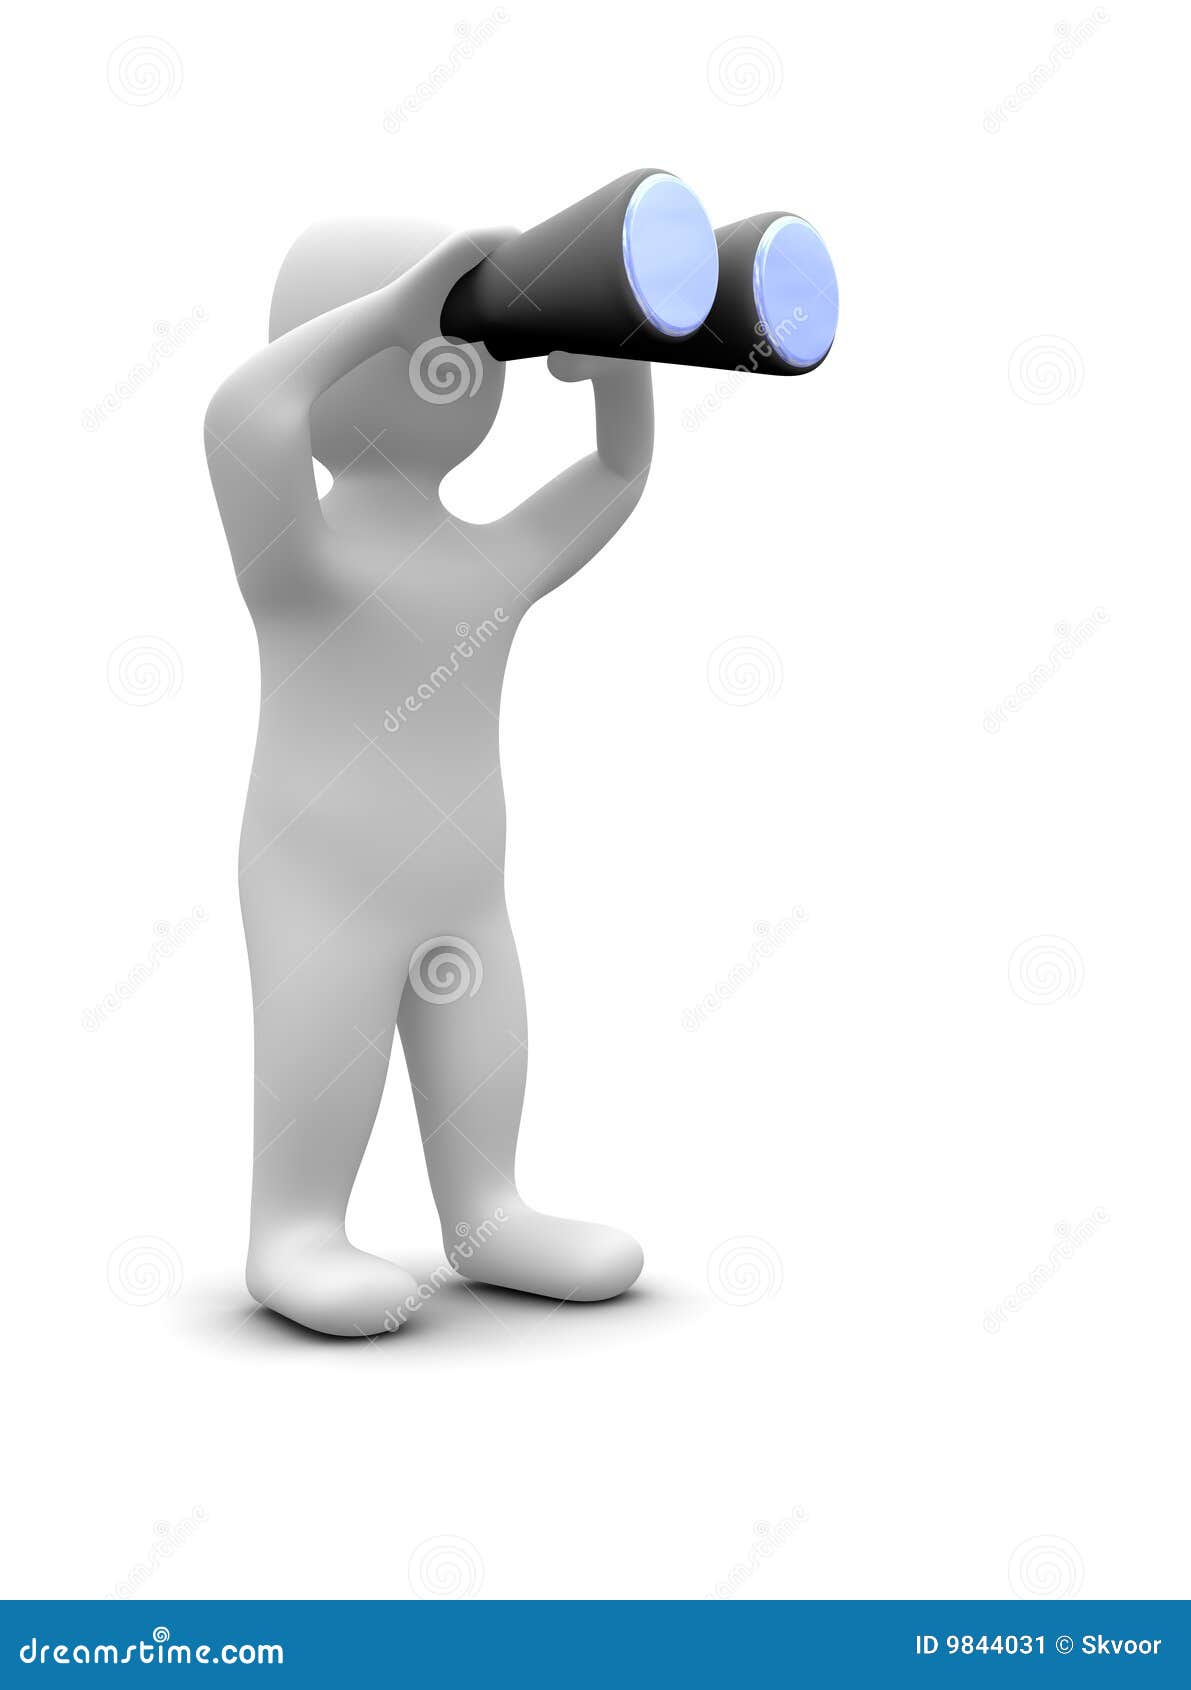 free clipart man looking through binoculars - photo #6